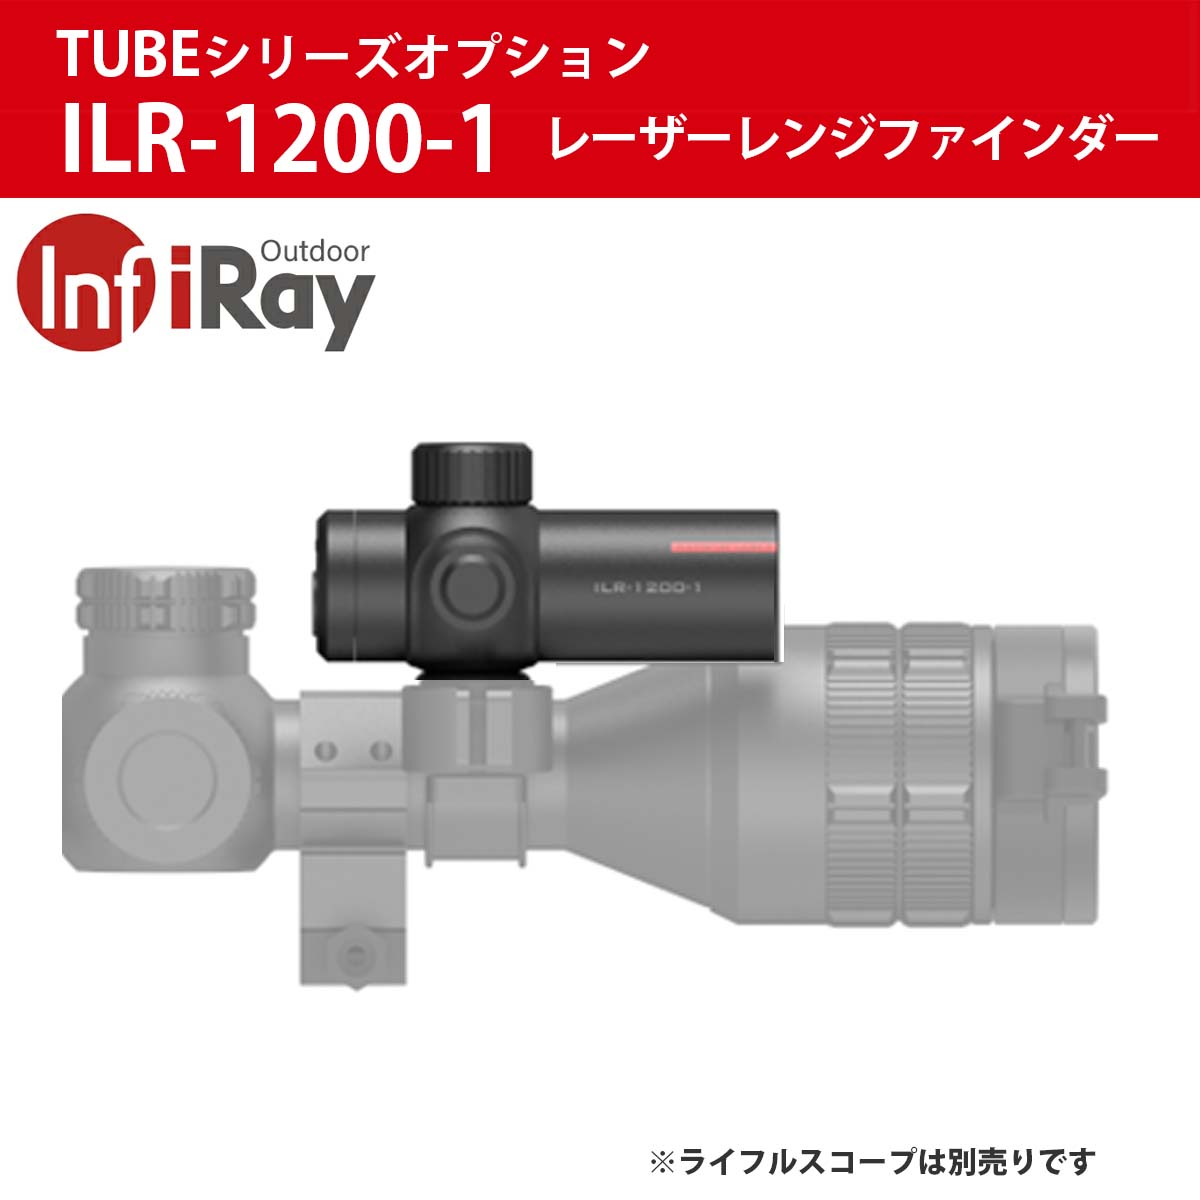 ILR-1200-1